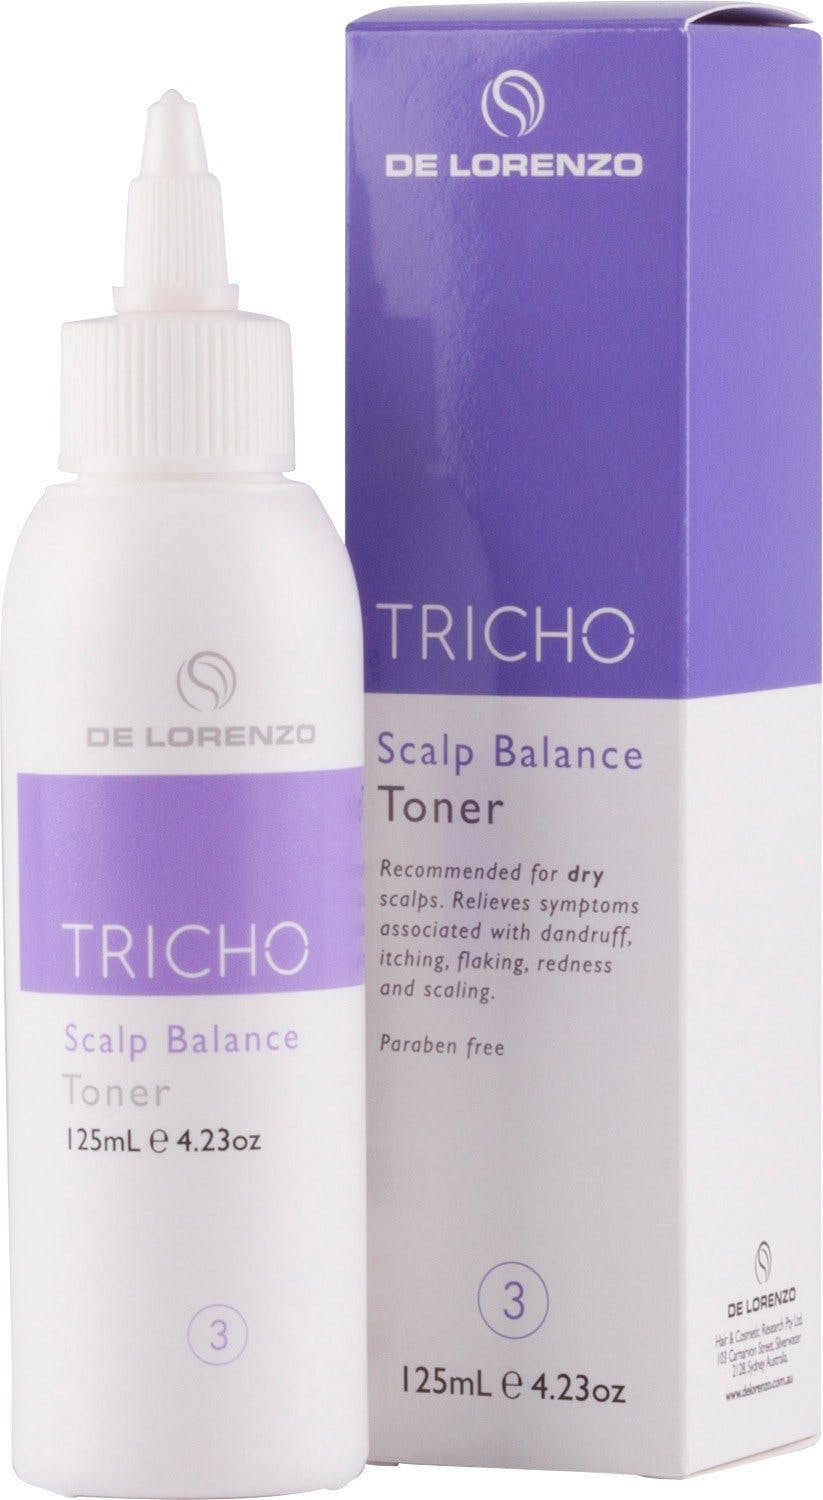 De Lorenzo Tricho Scalp Balance Toner 125ml